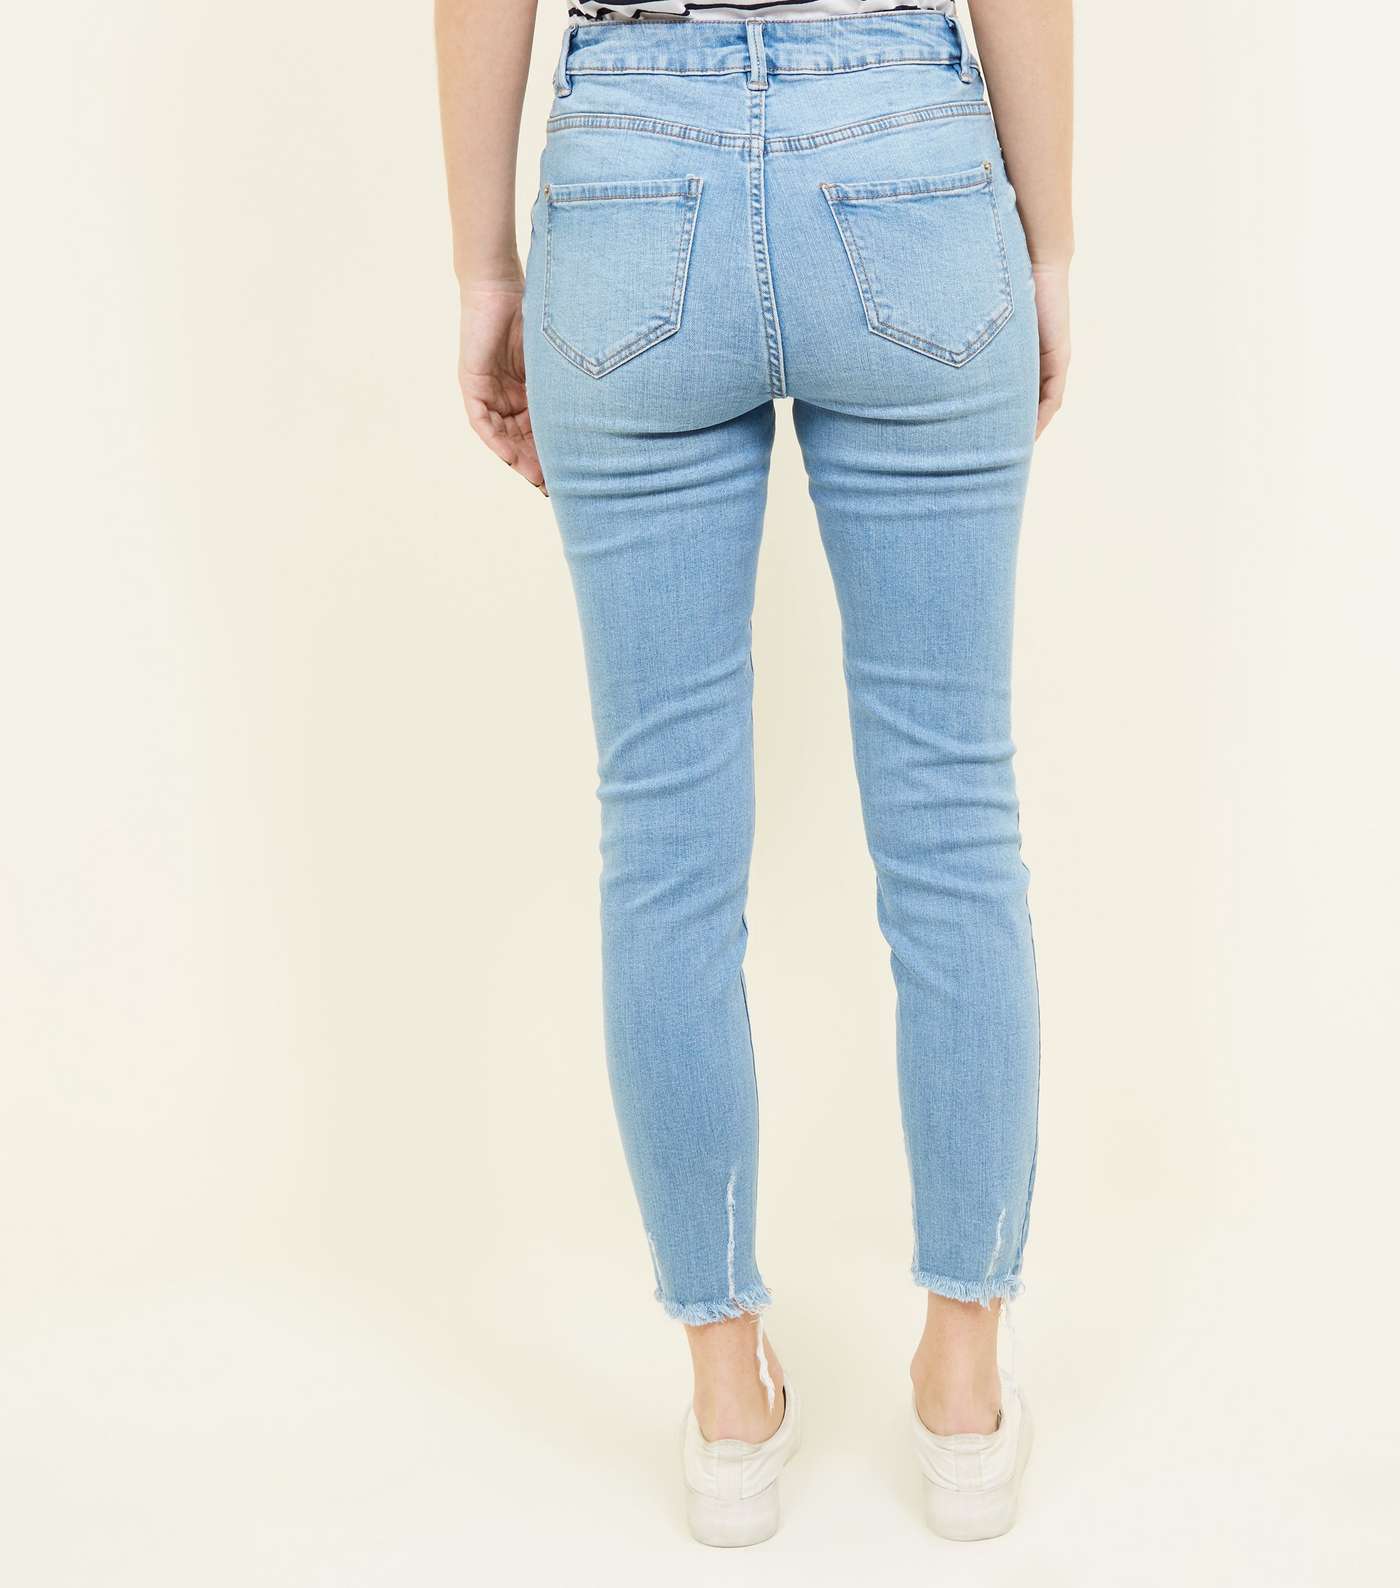 Pale Blue Distressed Hem Skinny Jenna Jeans Image 3